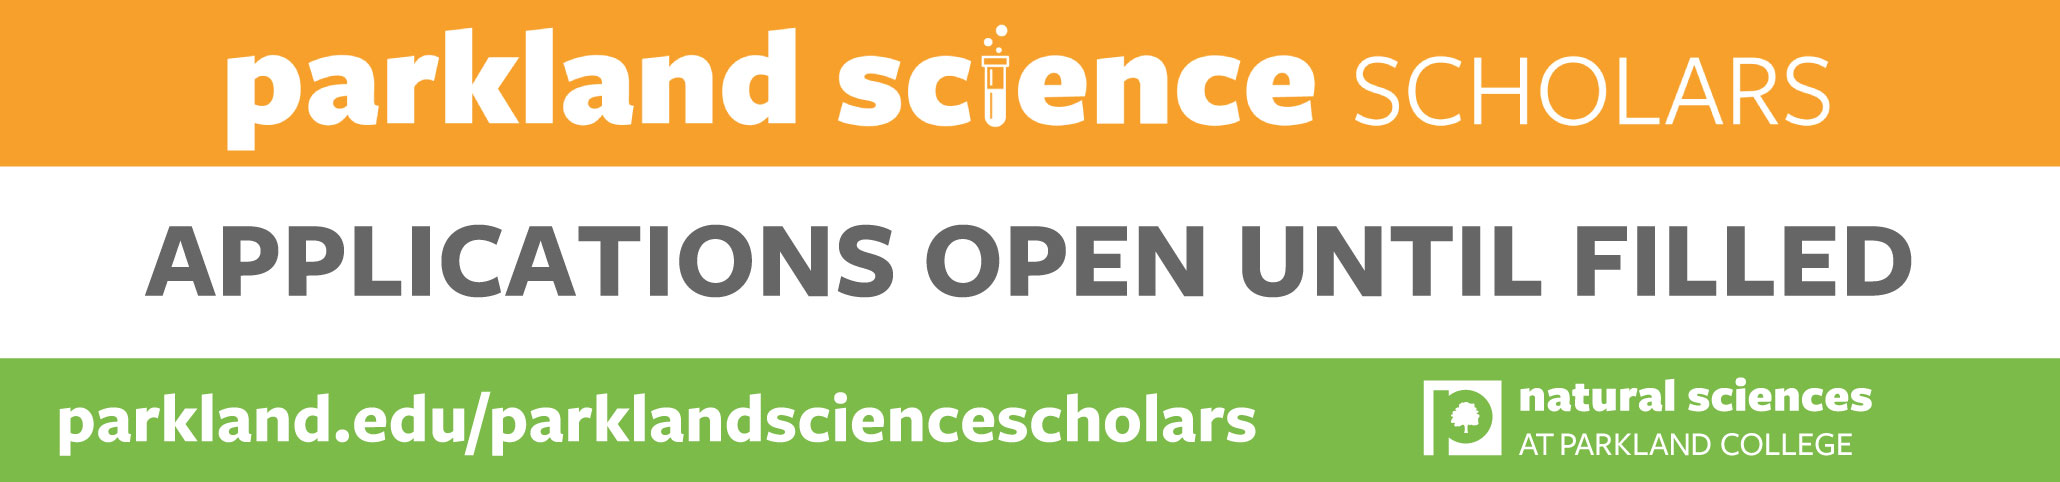 Science Scholars Applications Open